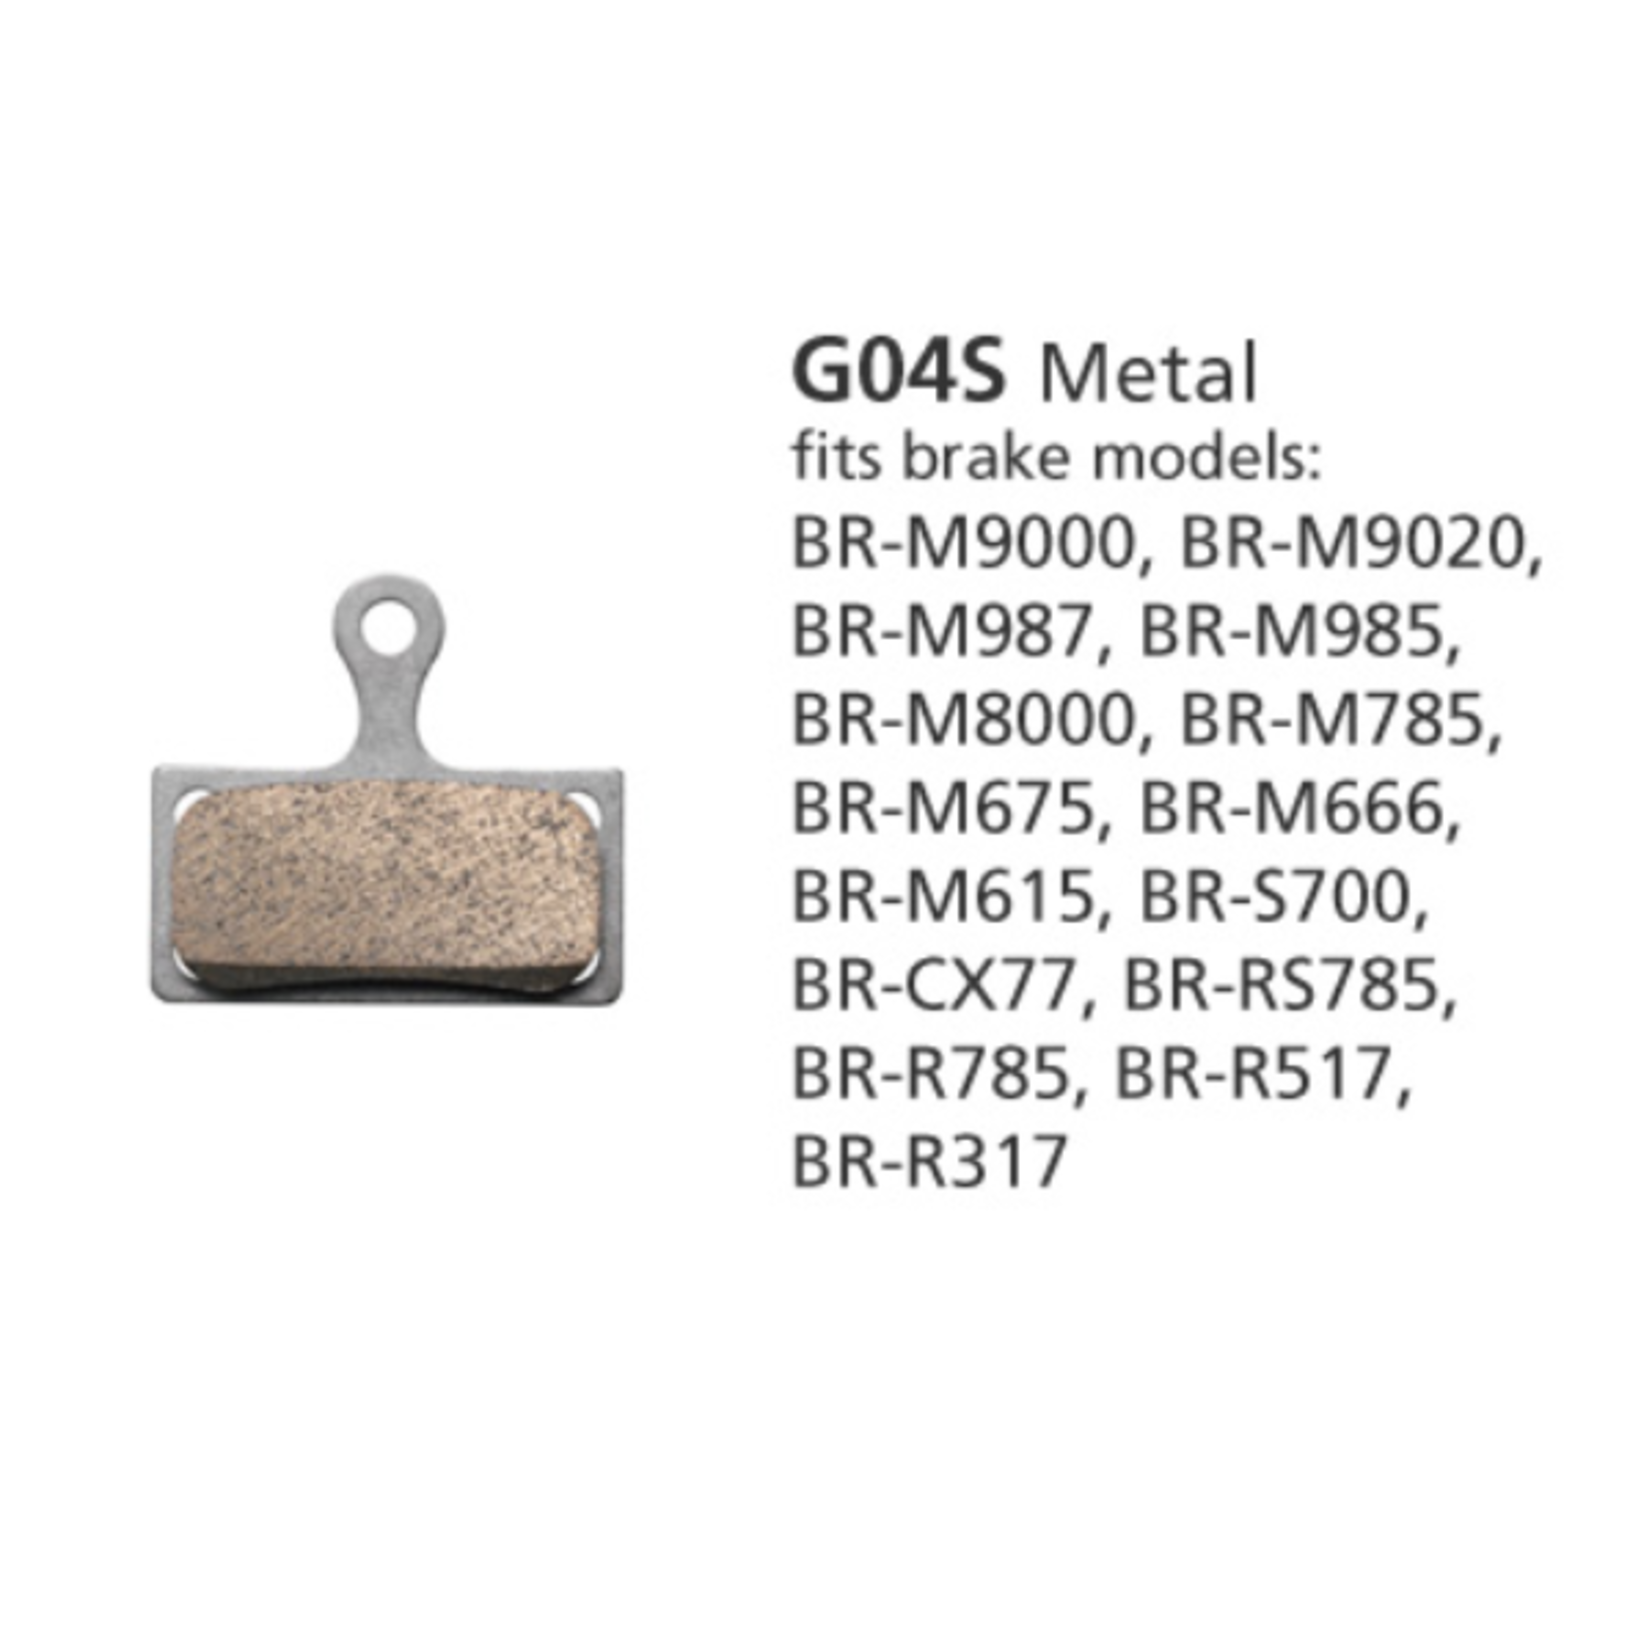 Shimano Shimano M8000 Metal G04S Brake Pad